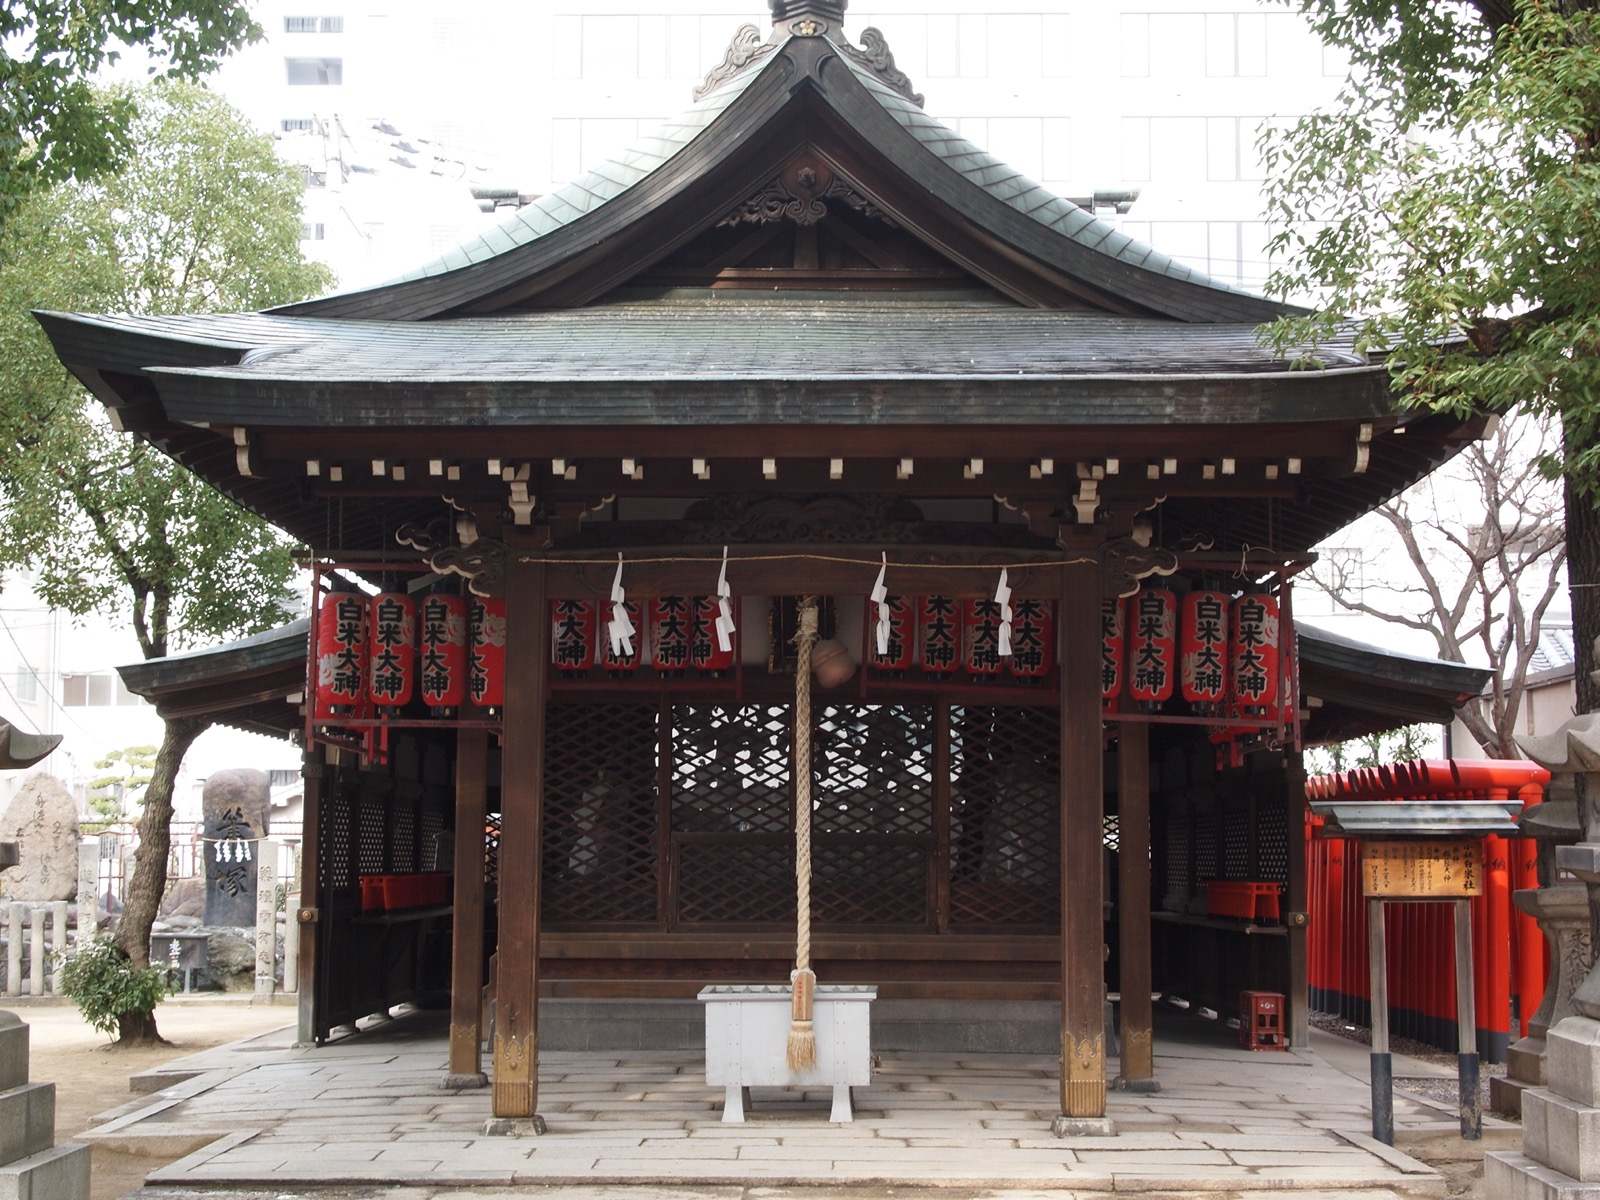 Photo of Osaka Tenmangu Shrine, Japan (大阪天満宮 by Kentaro Ohno)